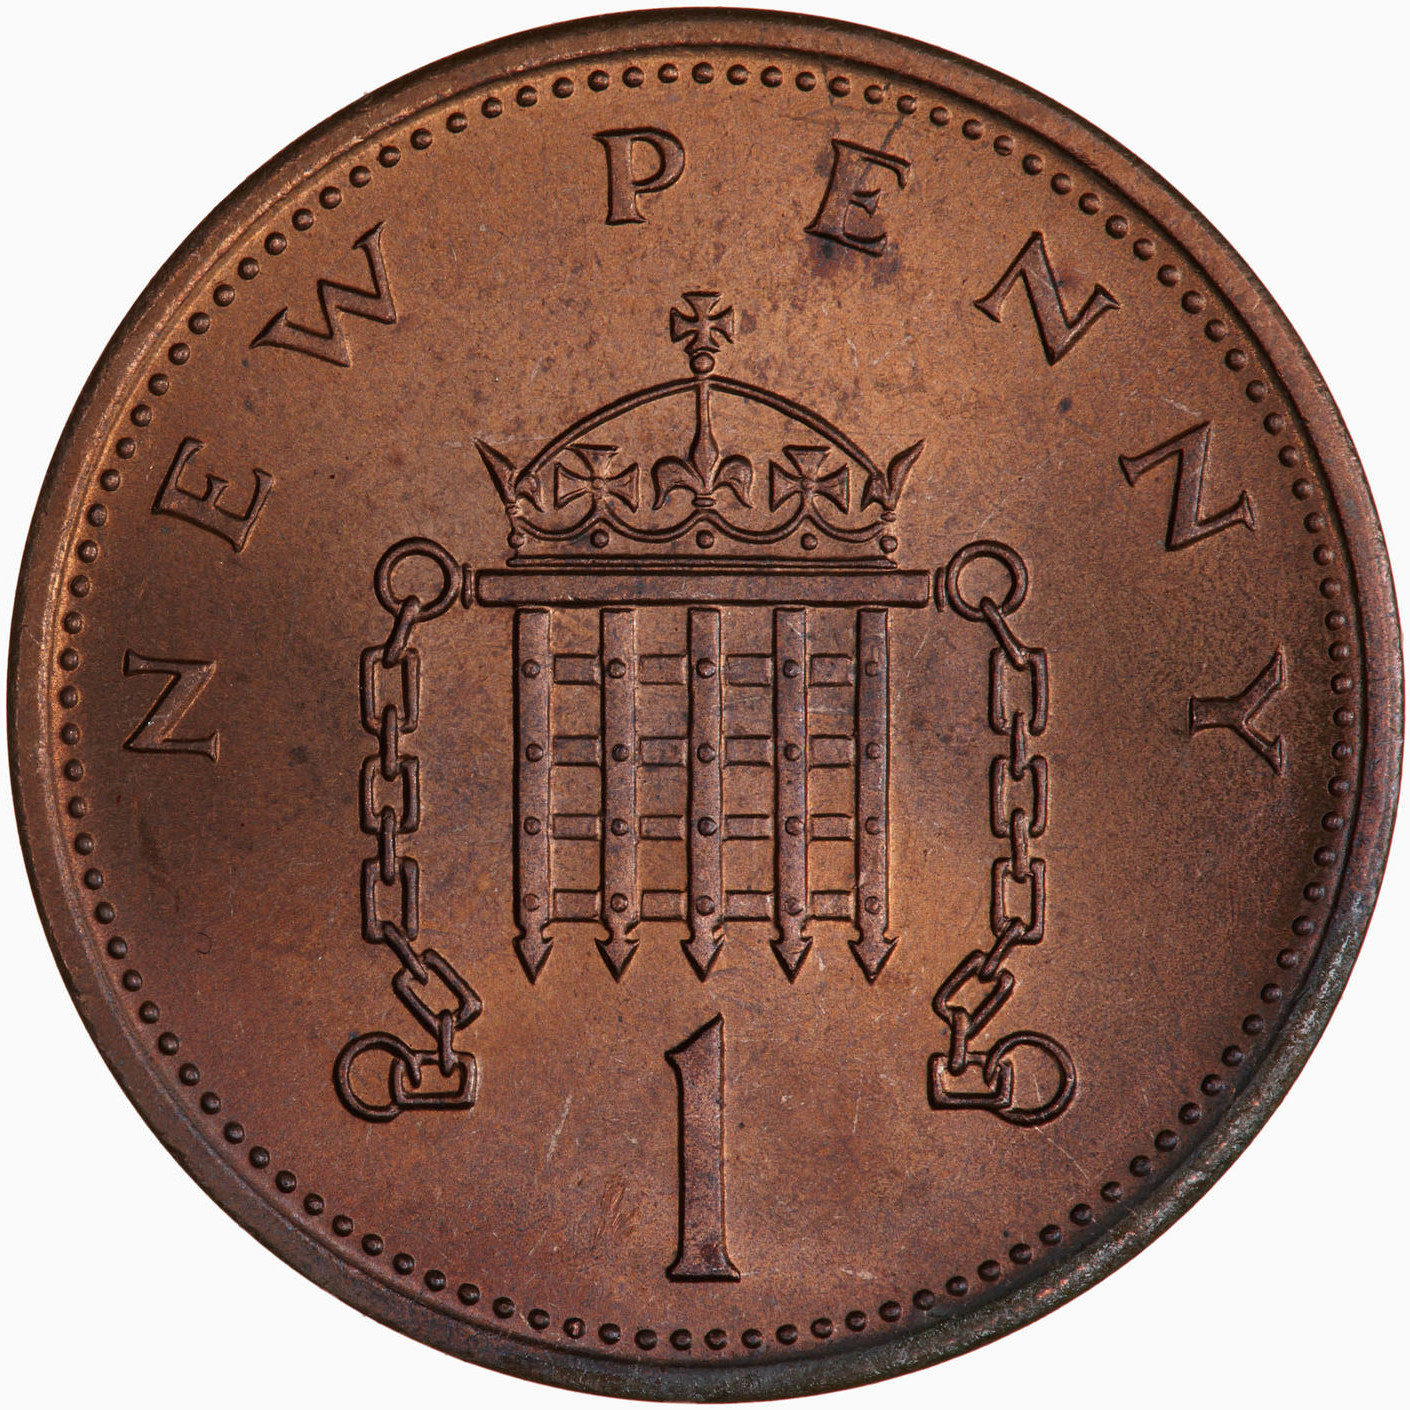 1971 1 penny